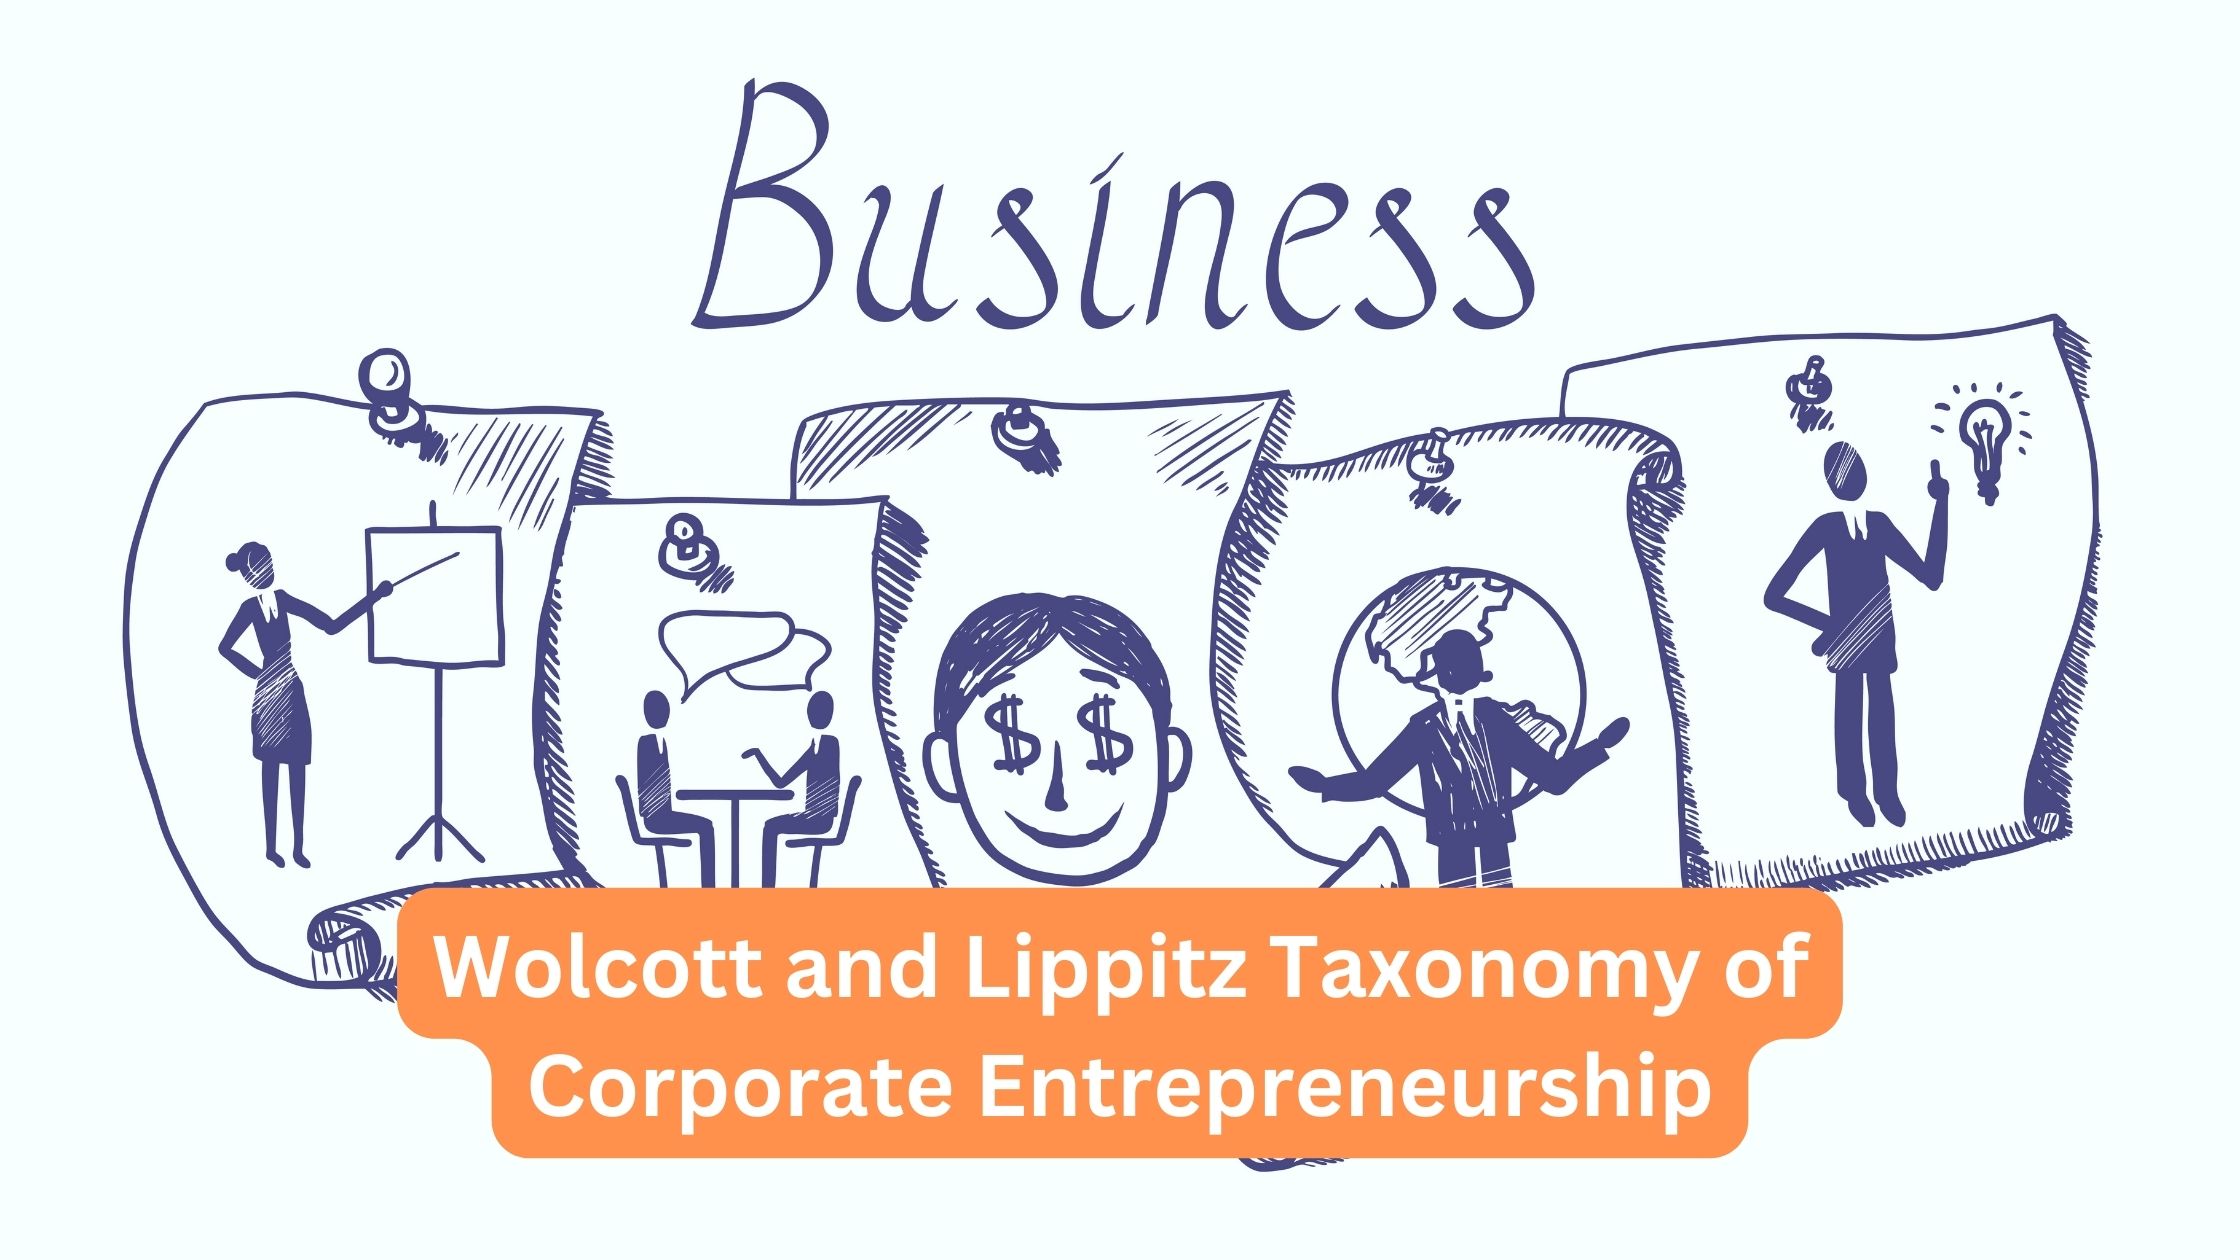 Wolcott and Lippitz Taxonomy of Corporate Entrepreneurship